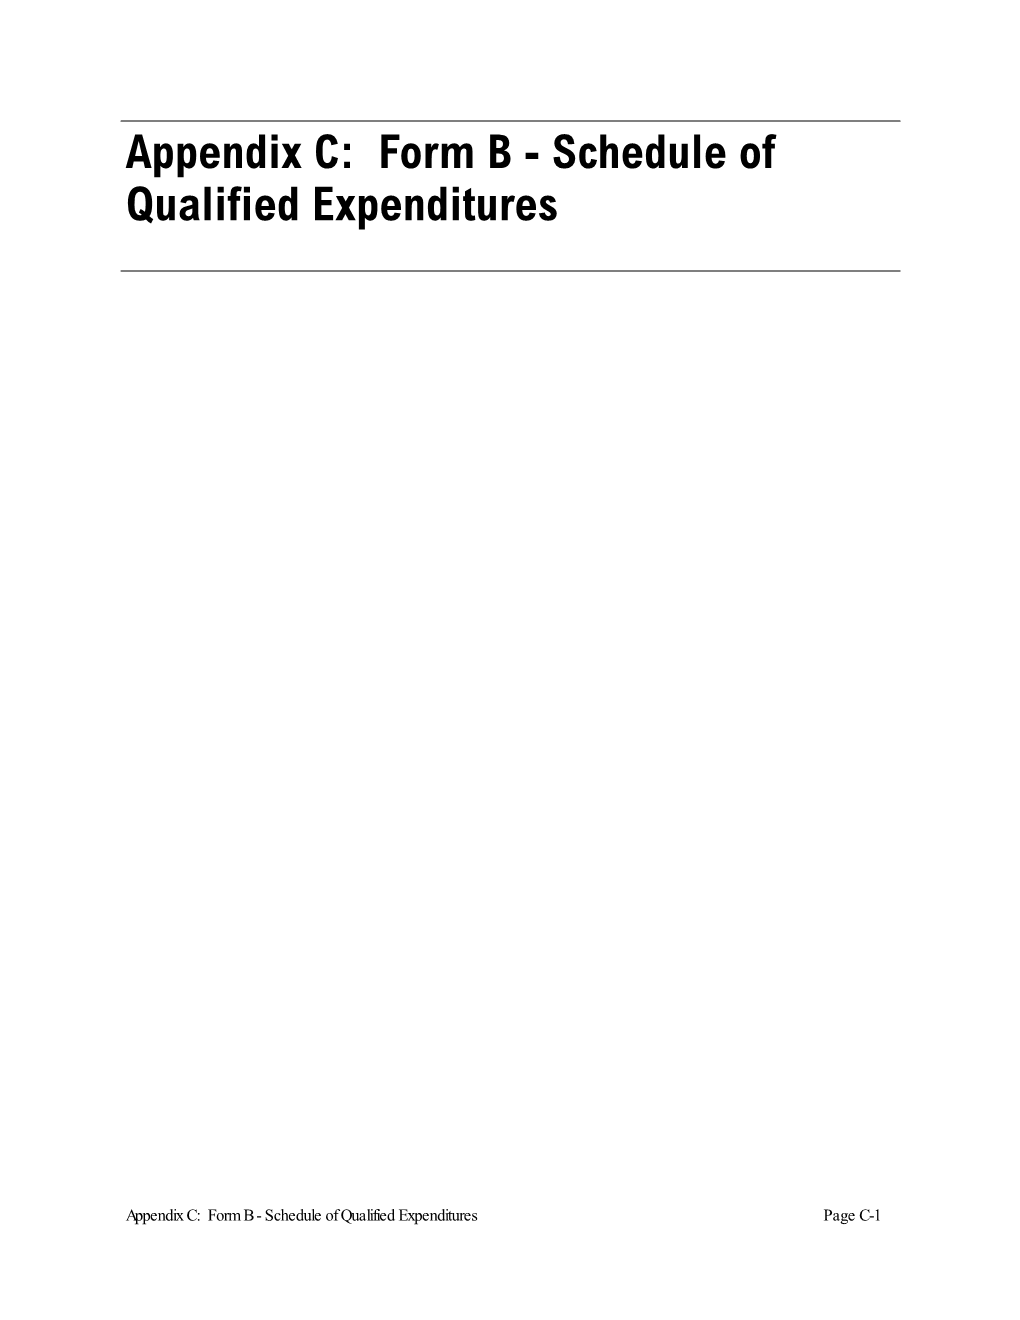 Appendix C: Form B - Schedule of Qualified Expenditures